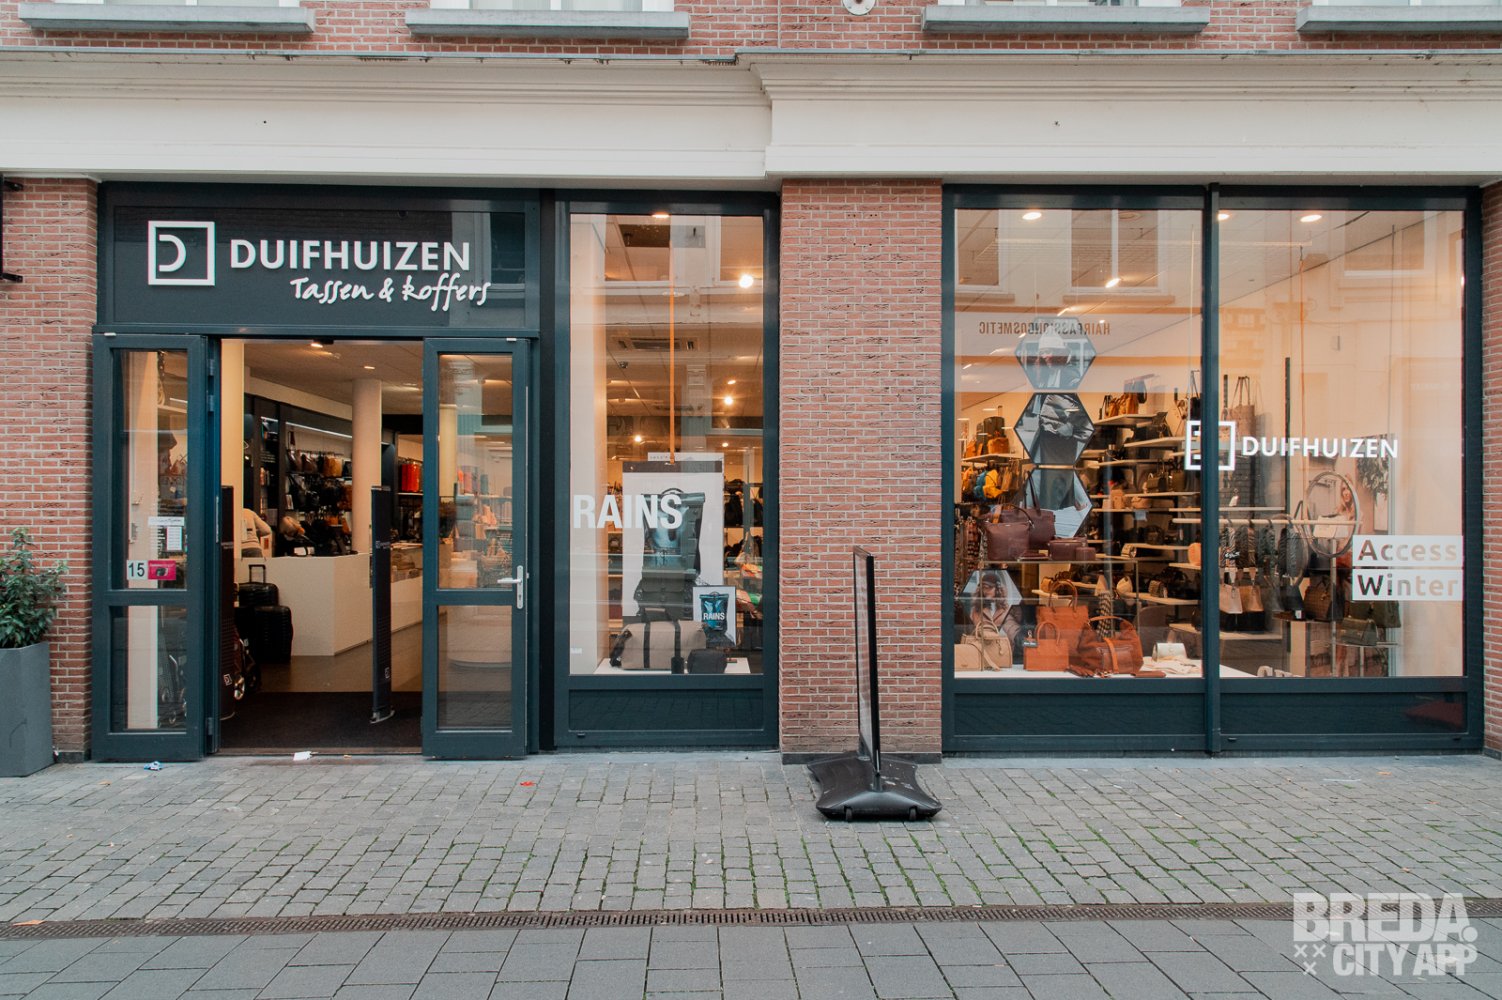 Alternatief Slim verband Duifhuizen - Breda City App